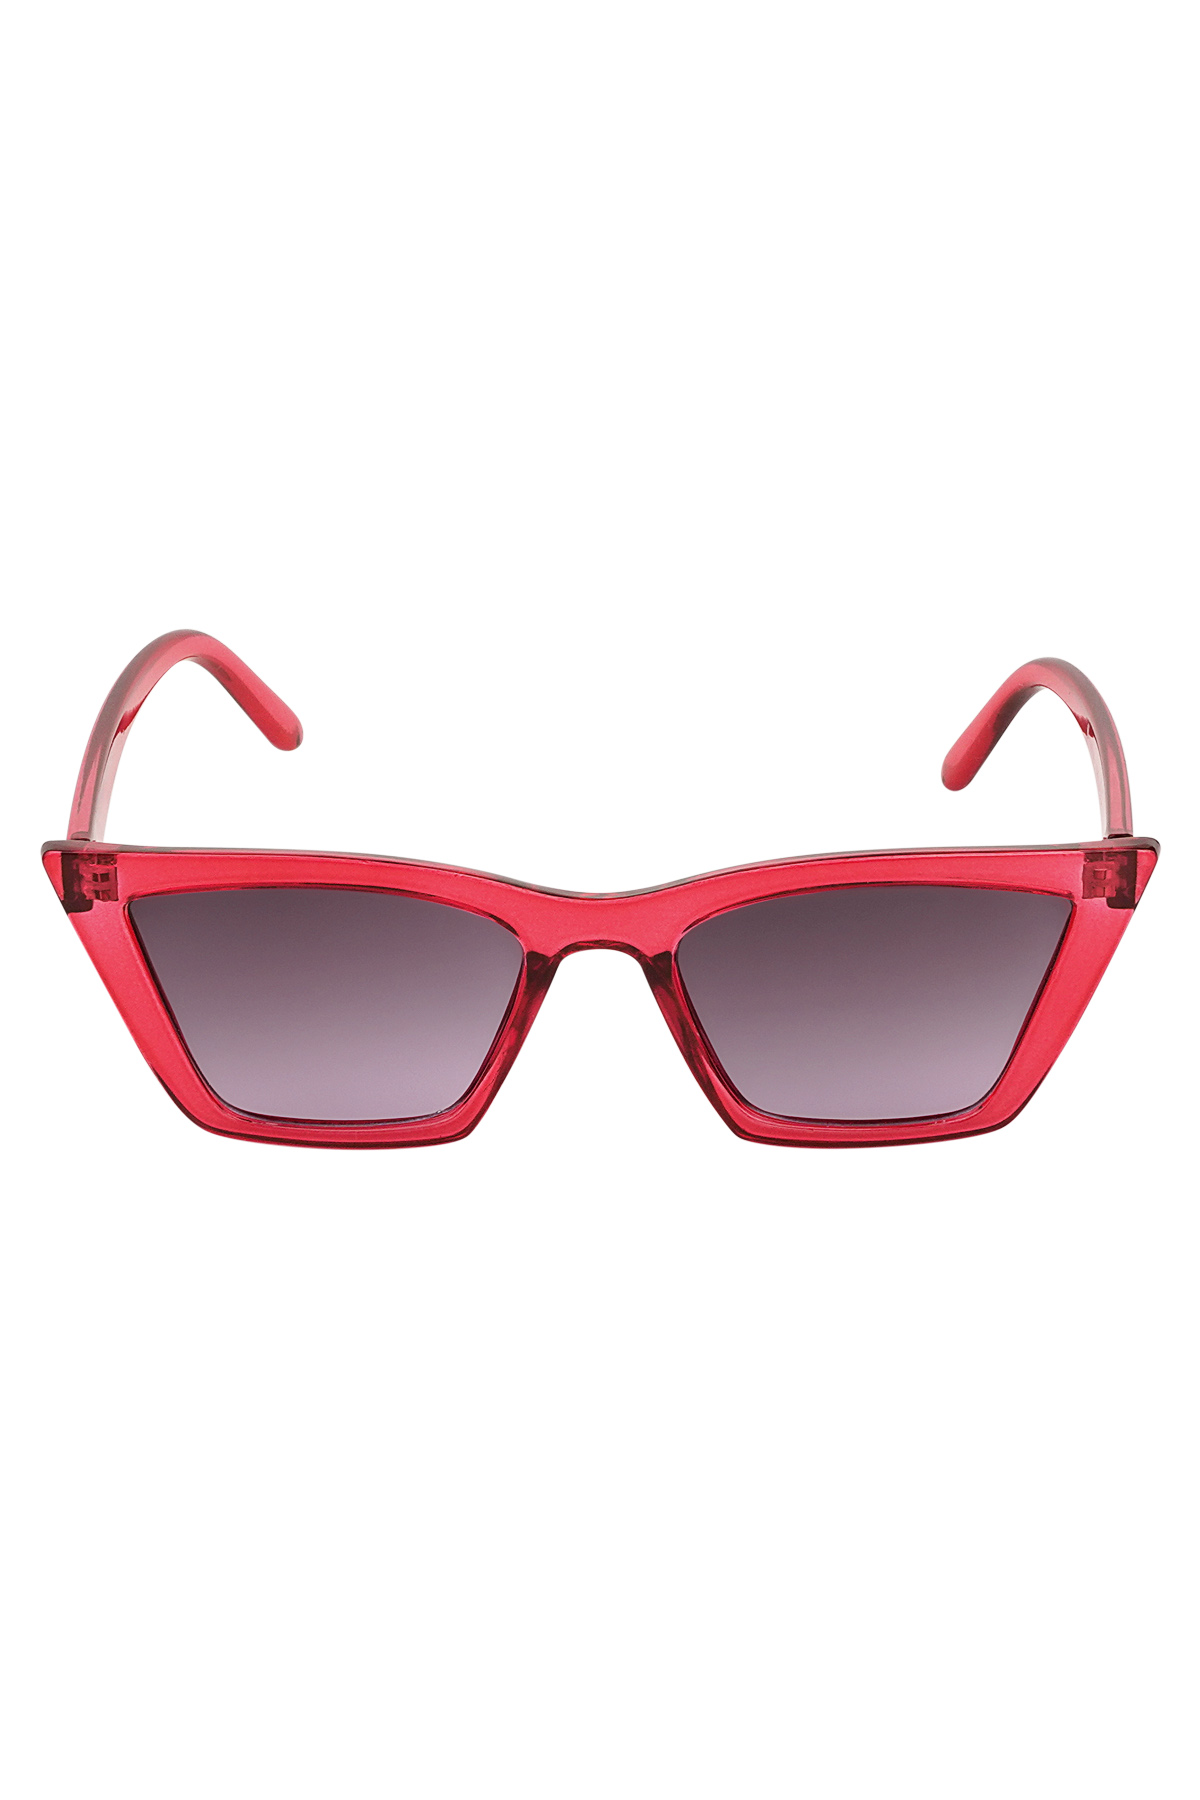 Monochrome cat eye sunglasses - red Picture5